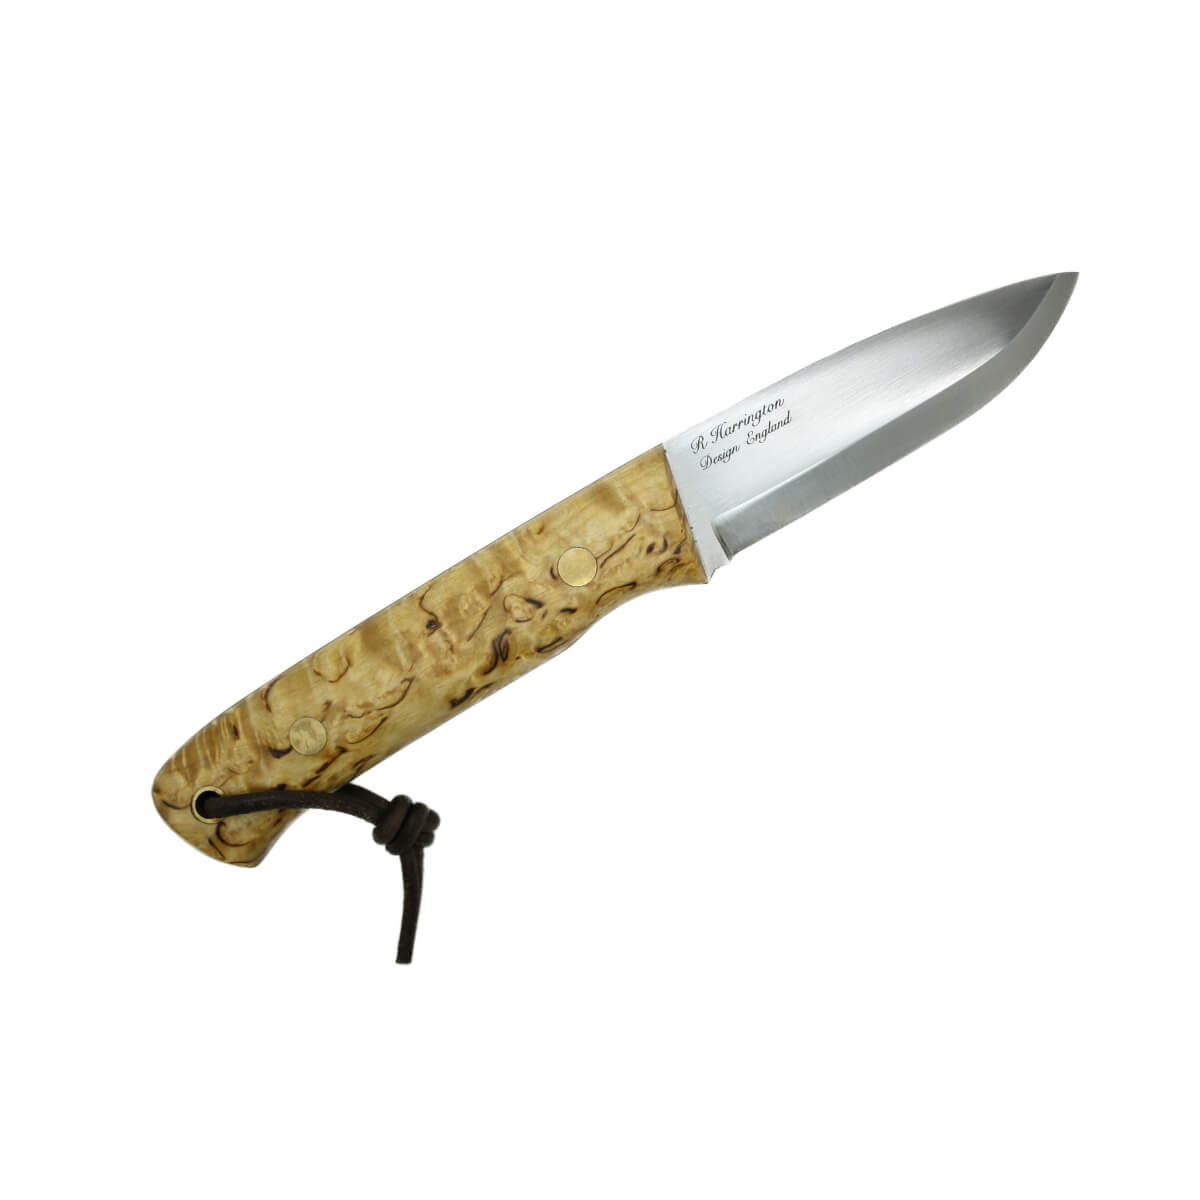 Casstrom Woodsman Knife - Curly Birch